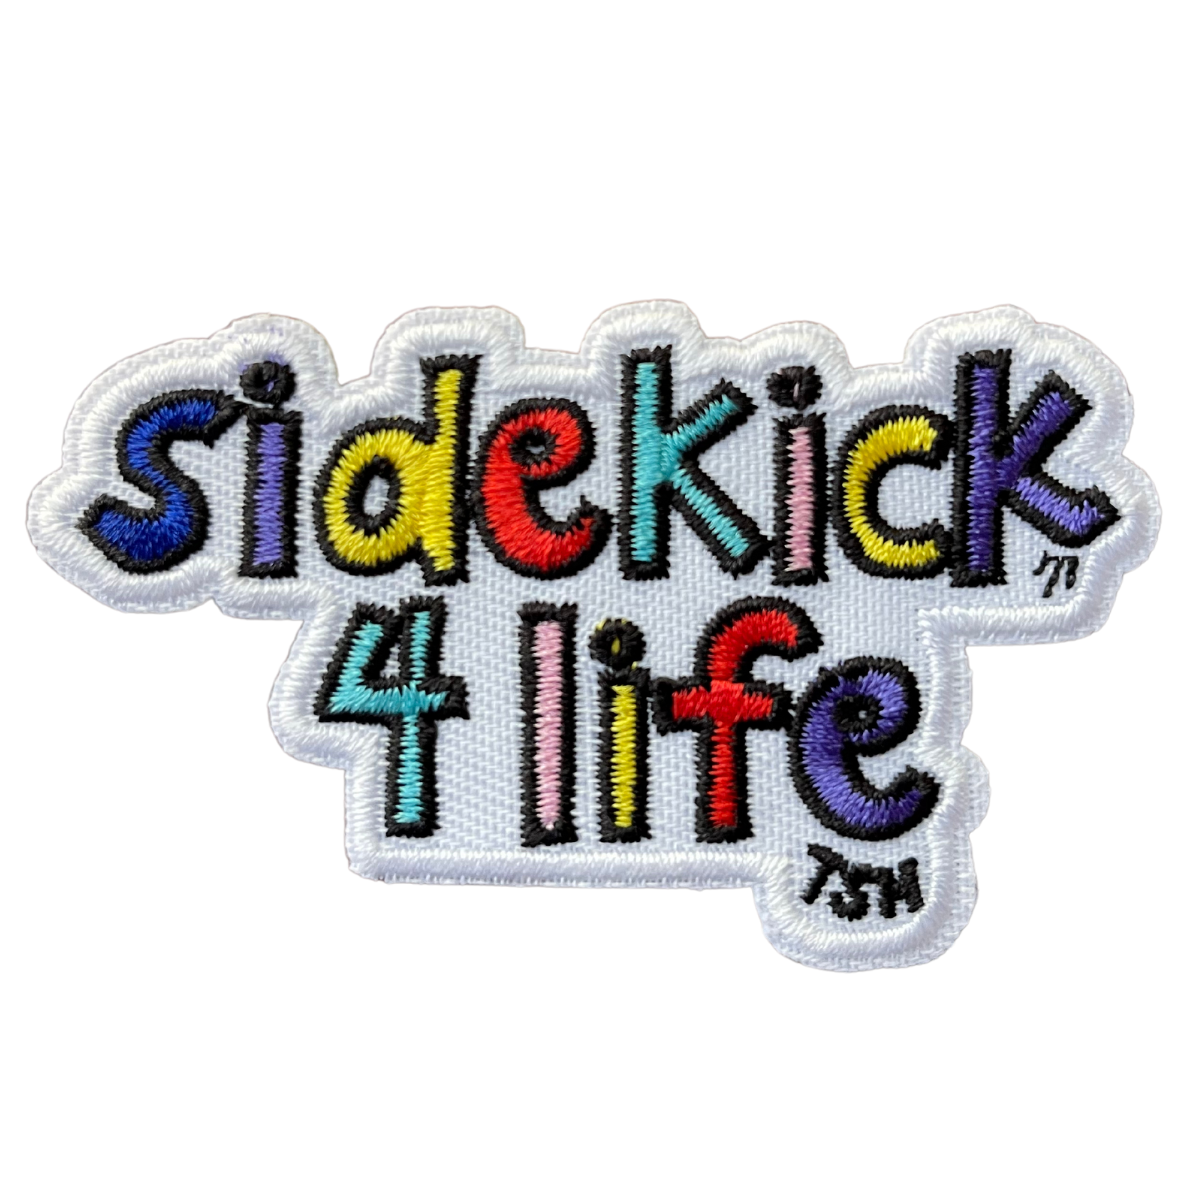 Sidekick 4 Life Patch - TinySuperheroes